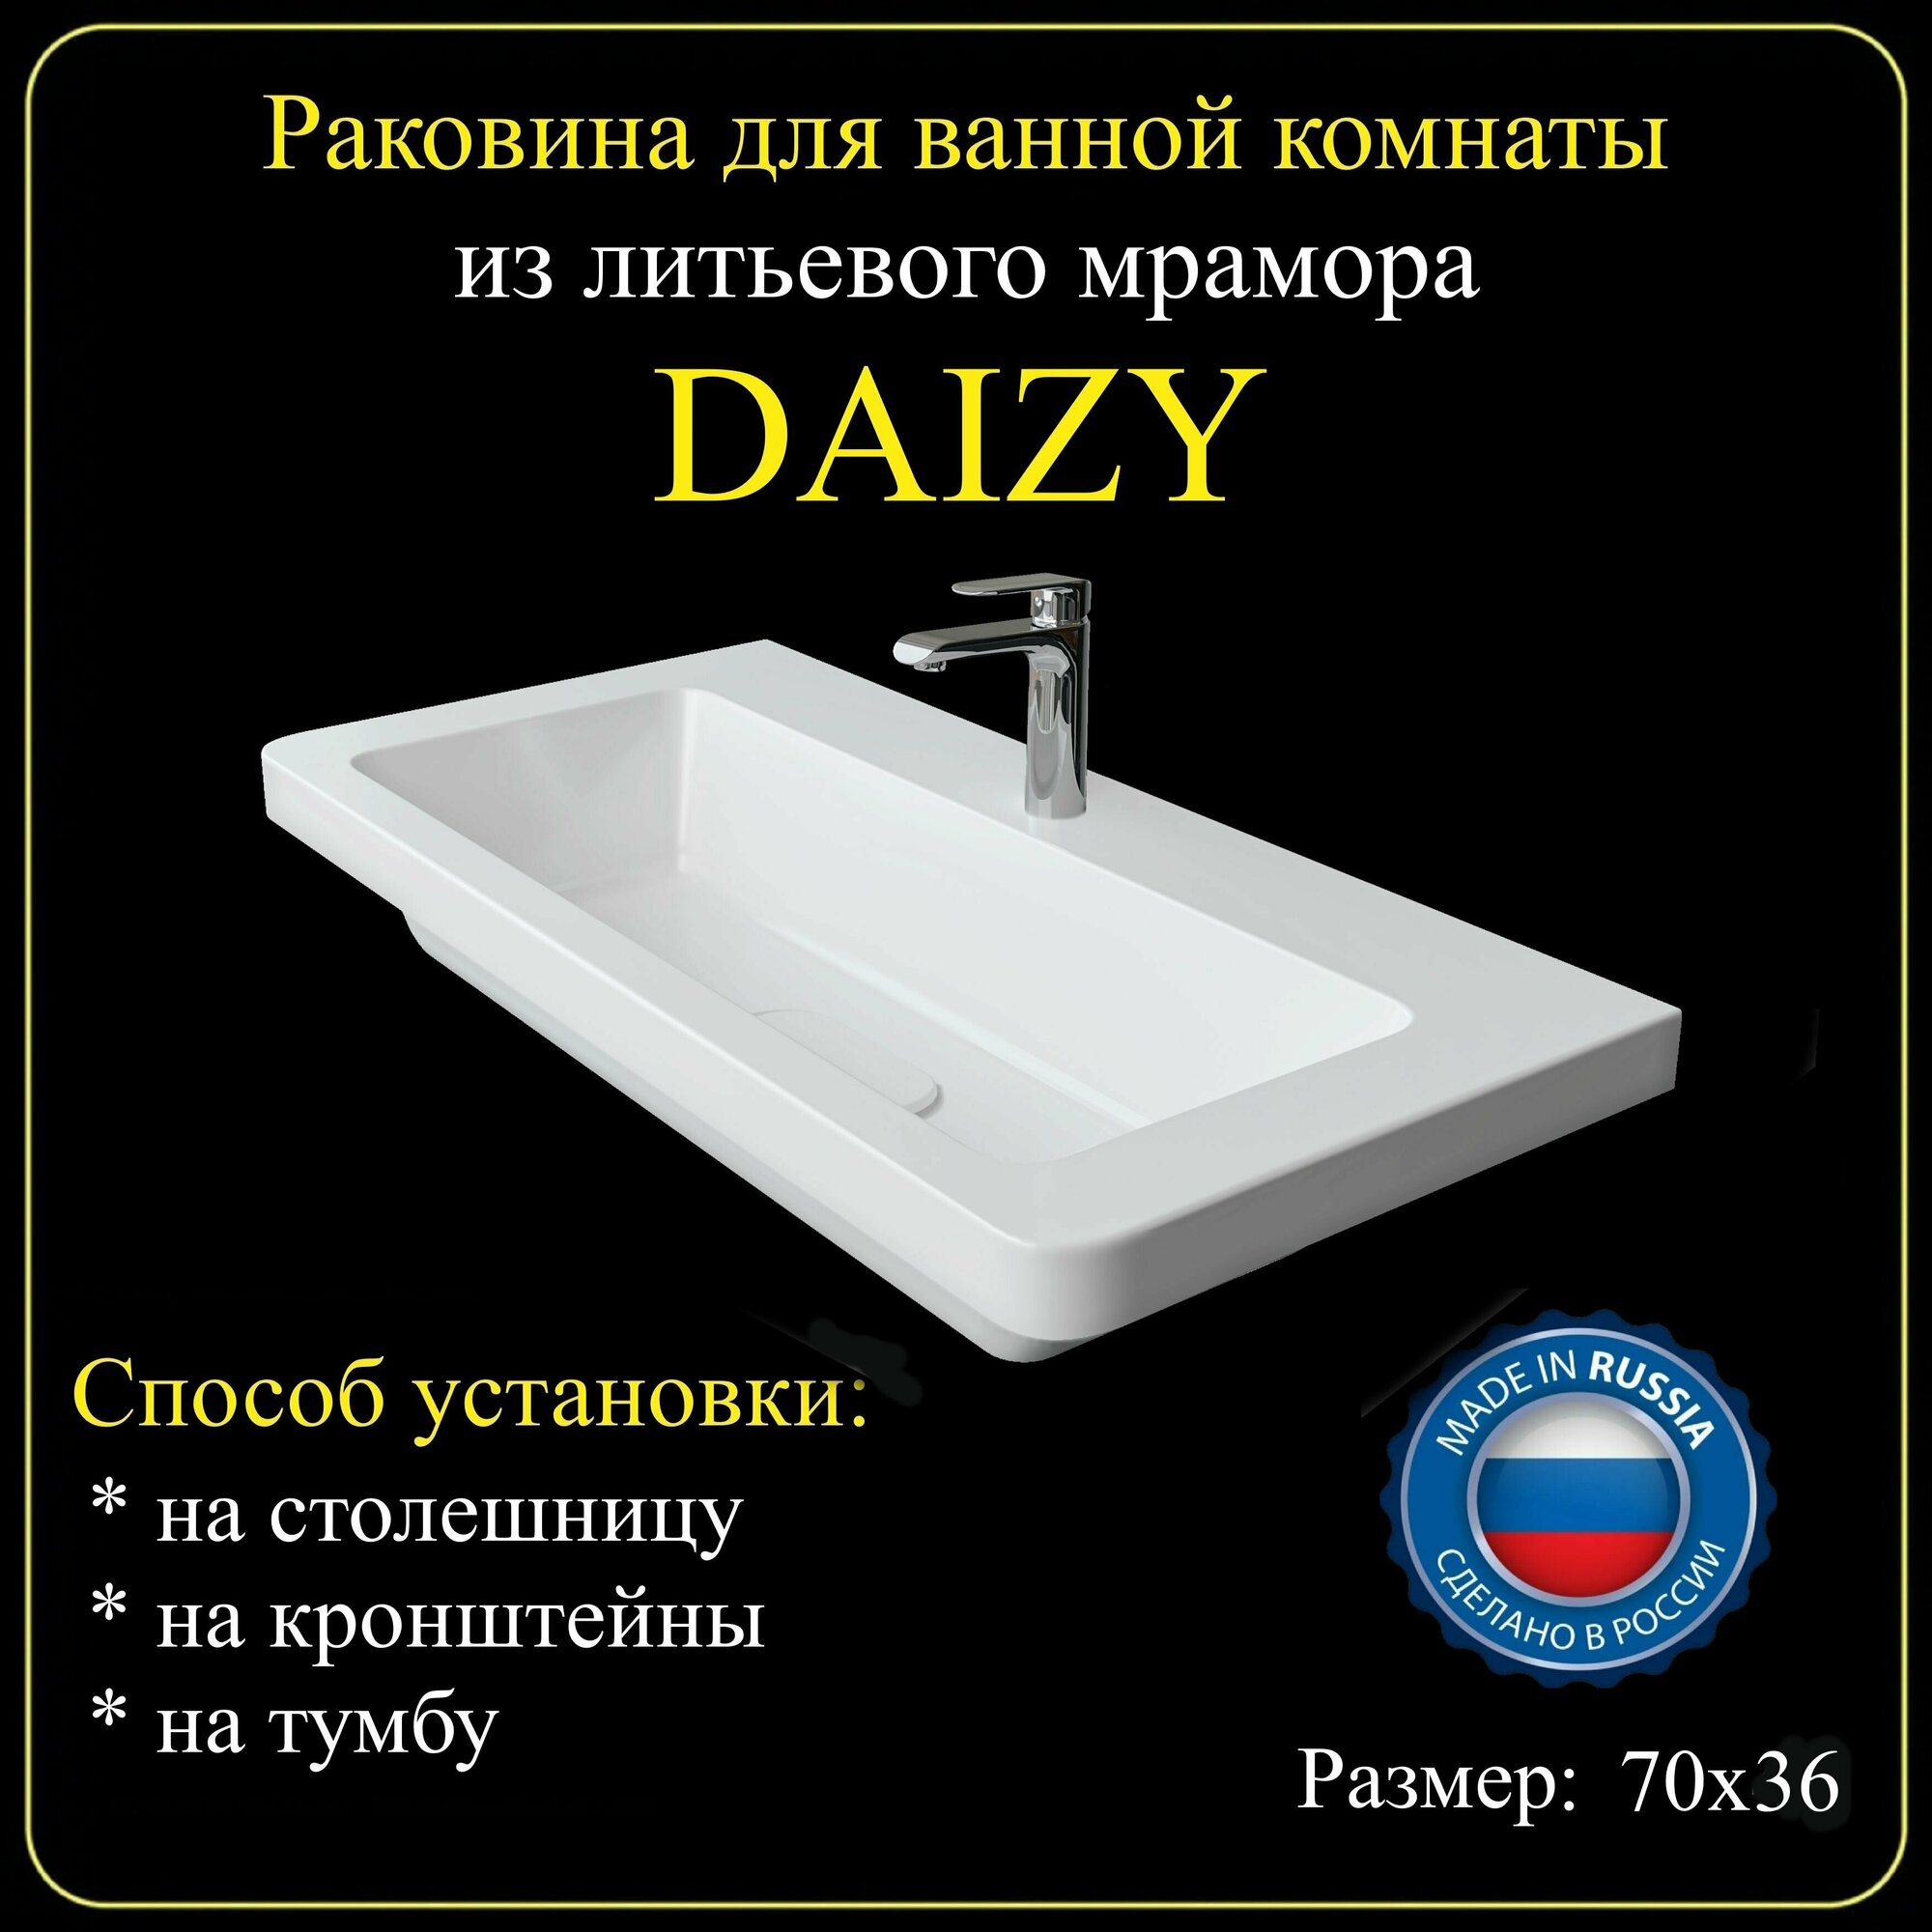 Раковина для ванной комнаты "DAIZY" 70х36 из литьевого мрамора JOYMY